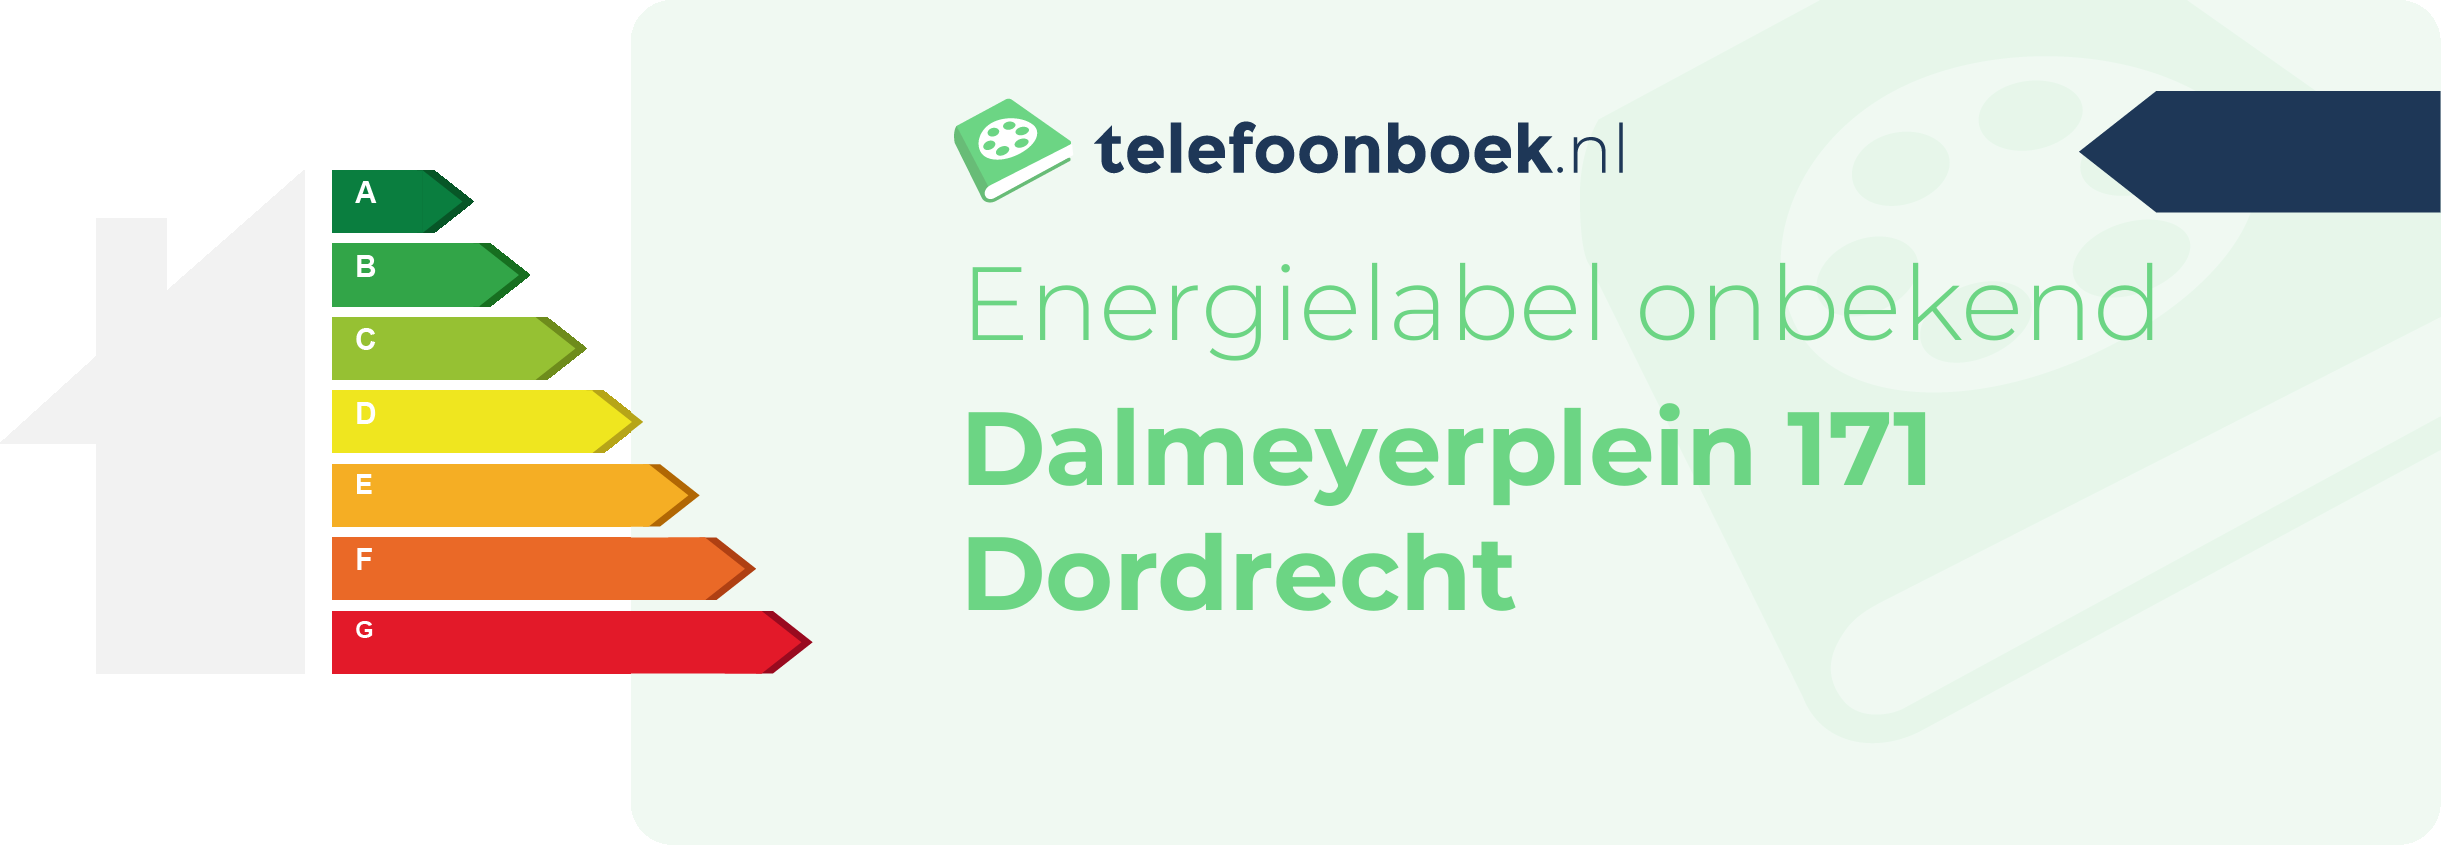 Energielabel Dalmeyerplein 171 Dordrecht